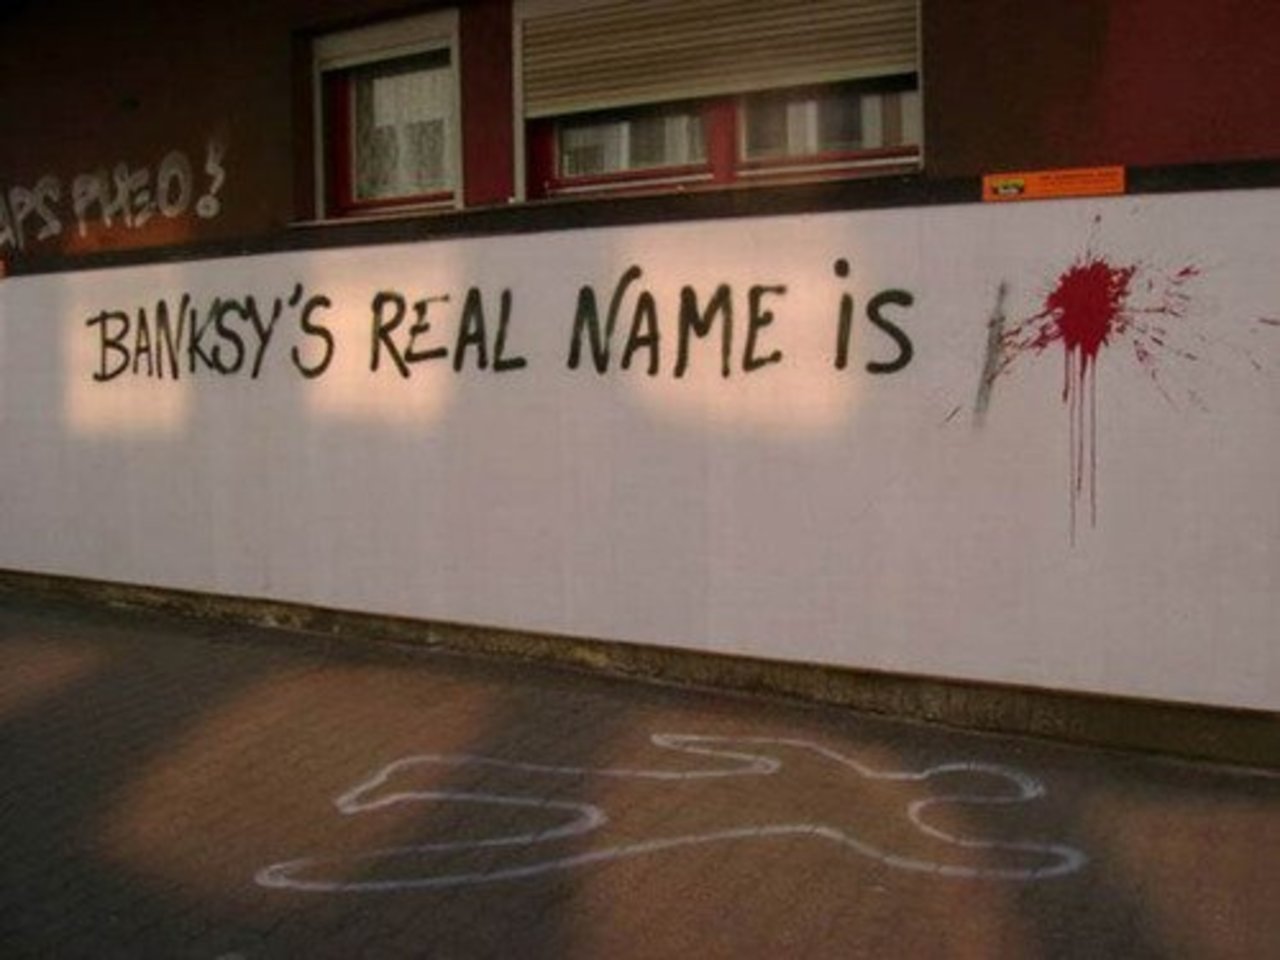 What's the deal with #Banksy: http://bit.ly/1kJNjaE#graffiti #streetart #contemporaryart #urbanculture https://t.co/jnEE2QCGvJ